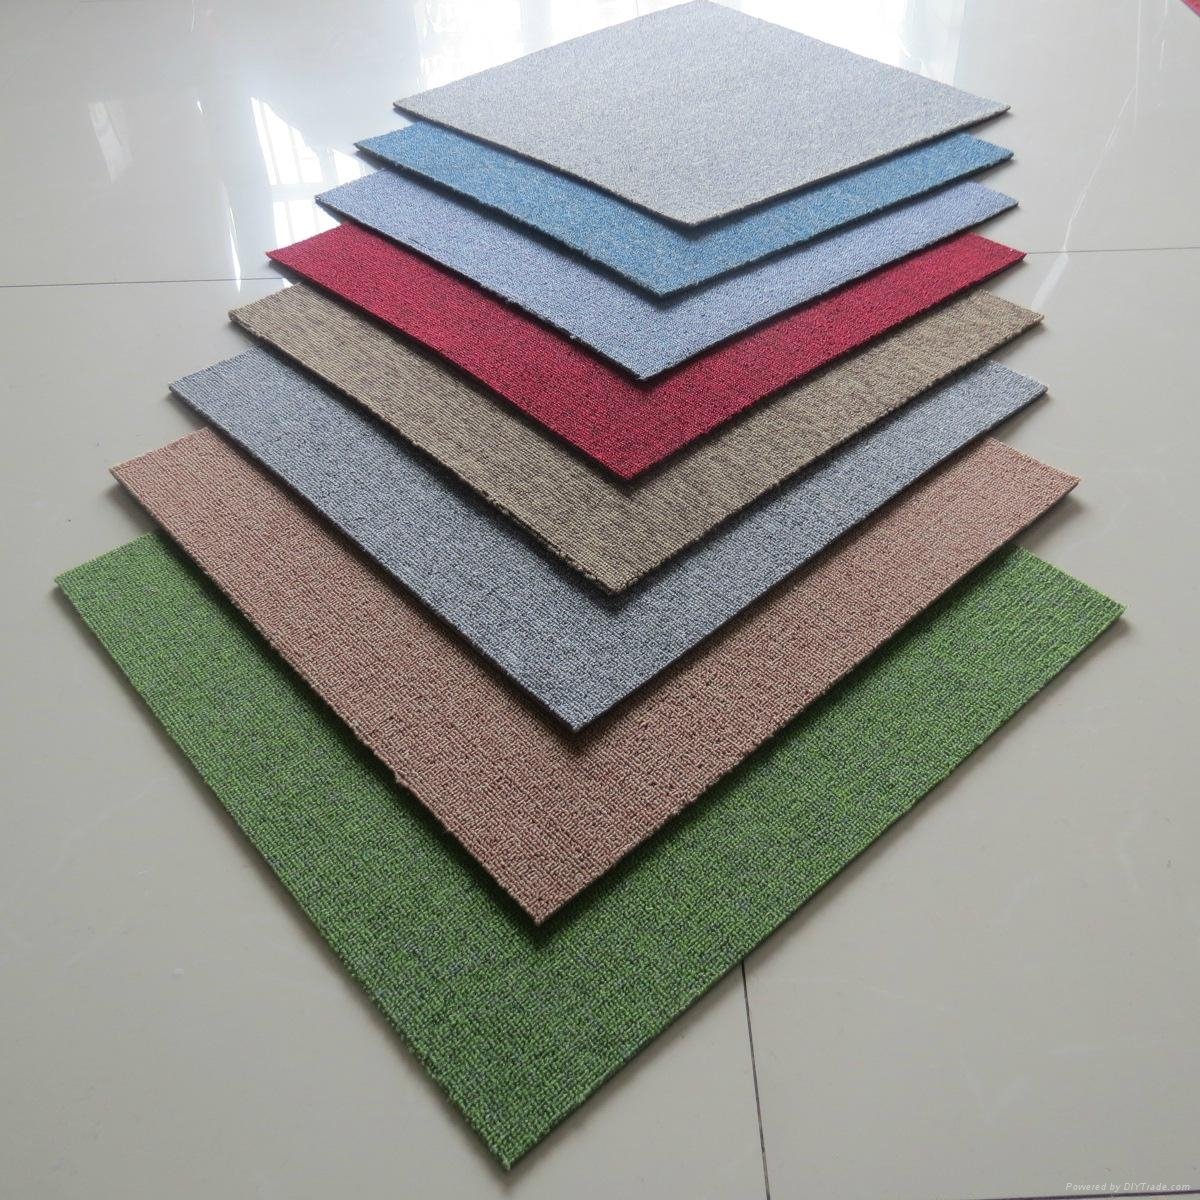 Different types of bathroom mosaic carpet tiles 3